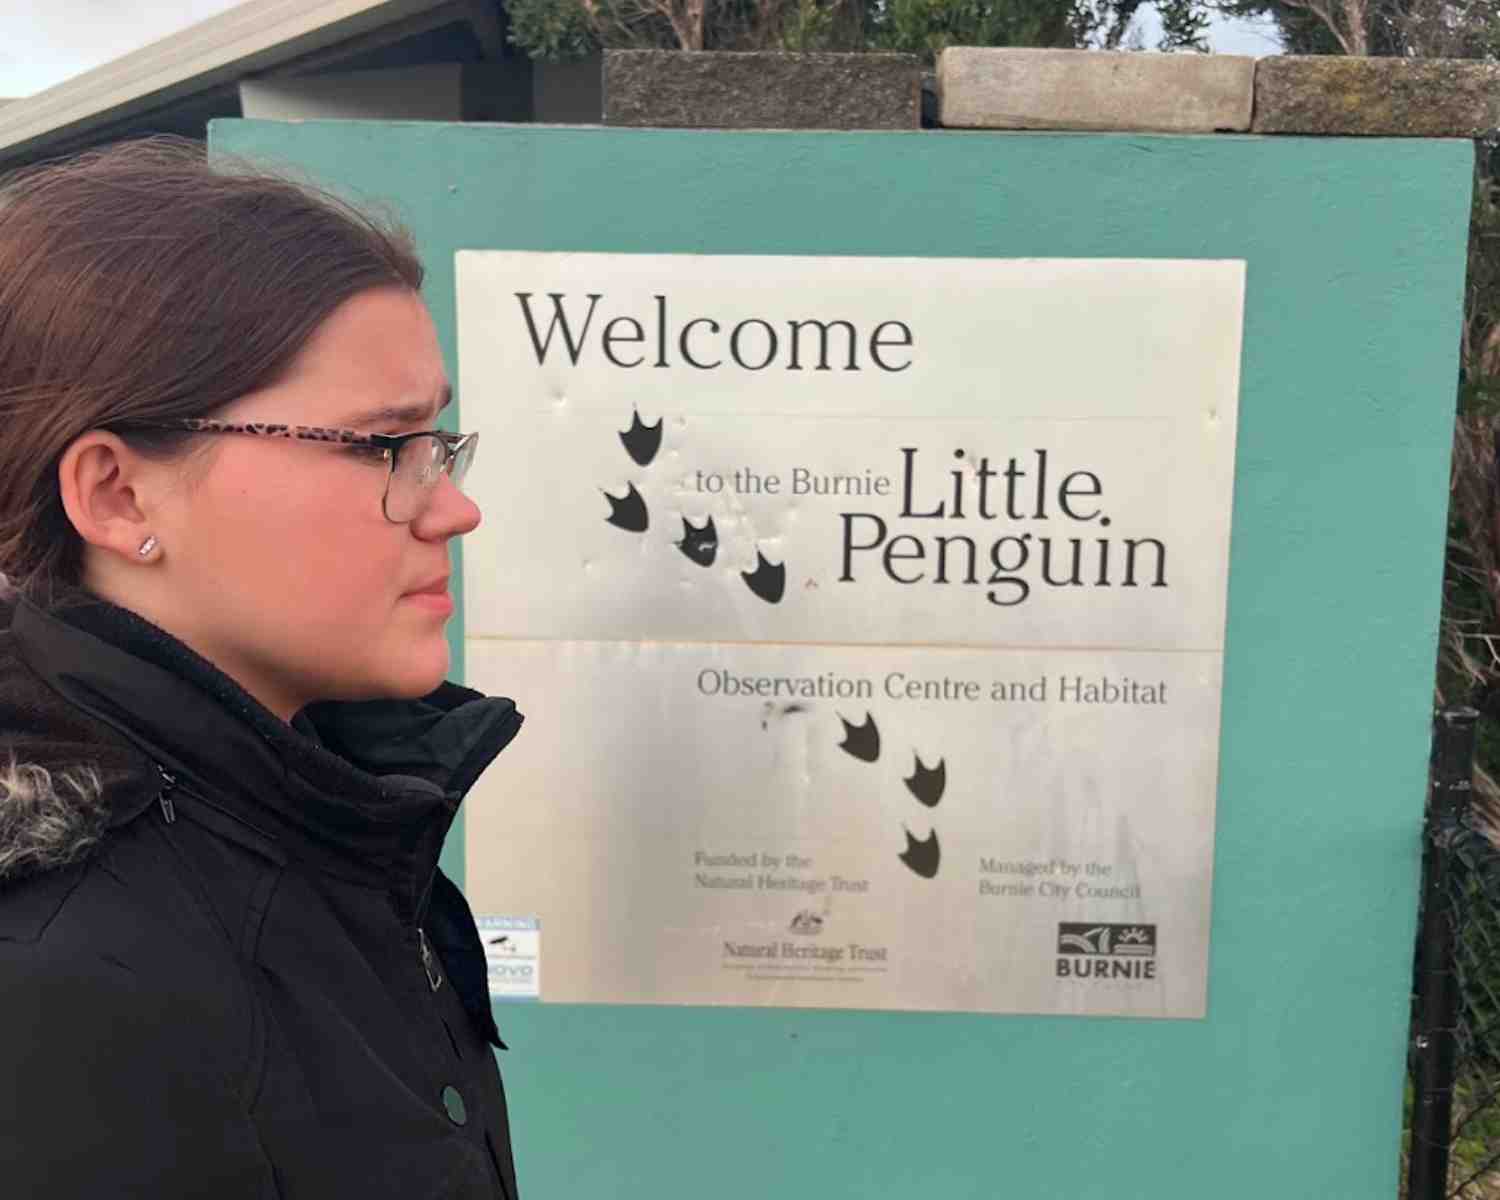 Finding penguins near Burnie